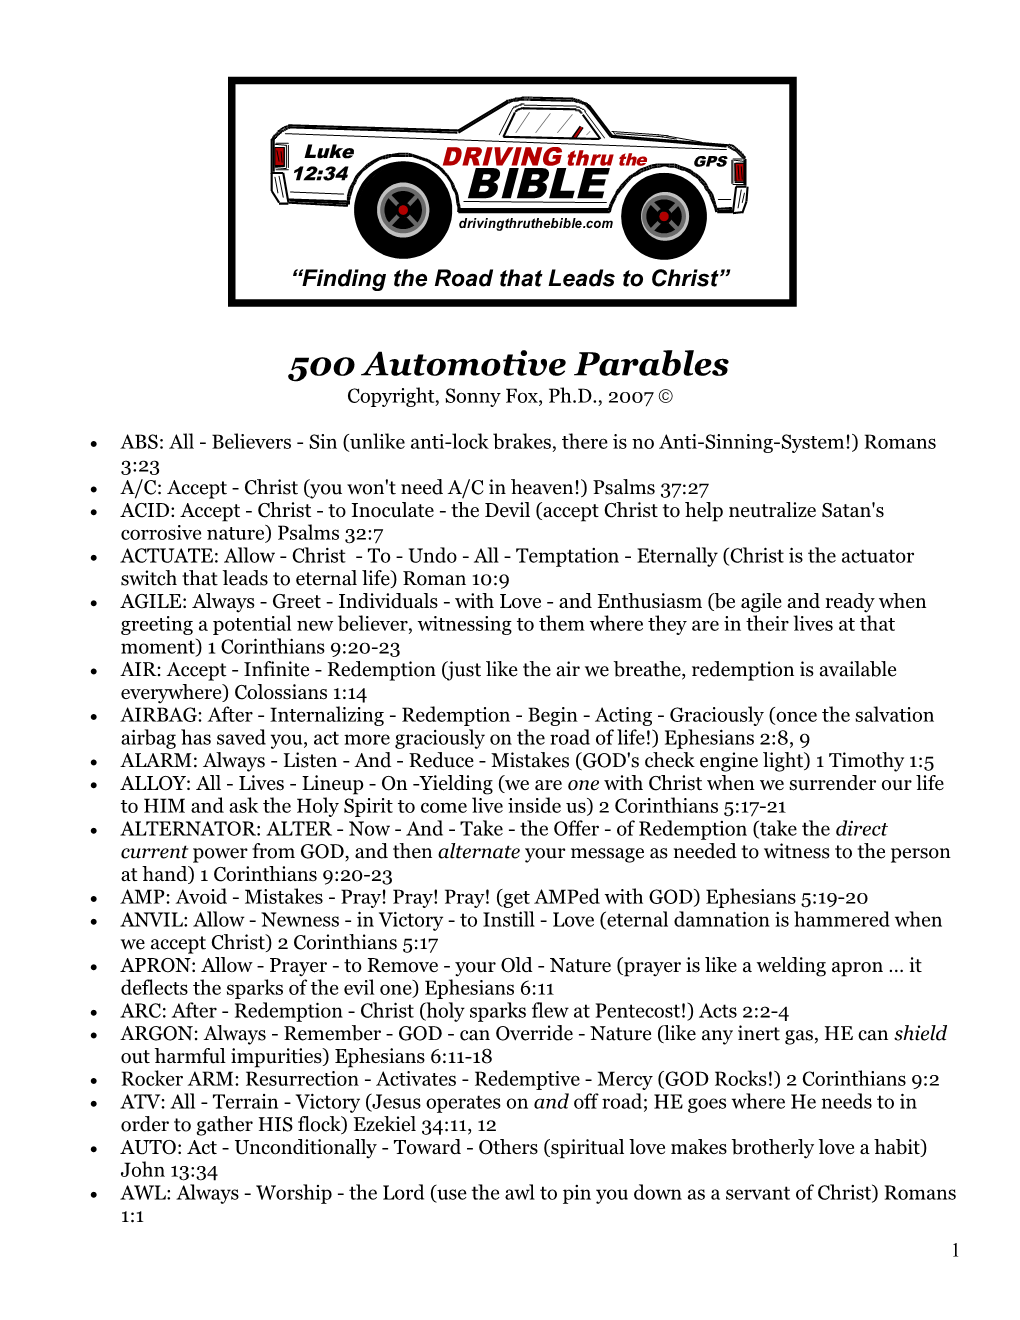 Motorsports Parables List